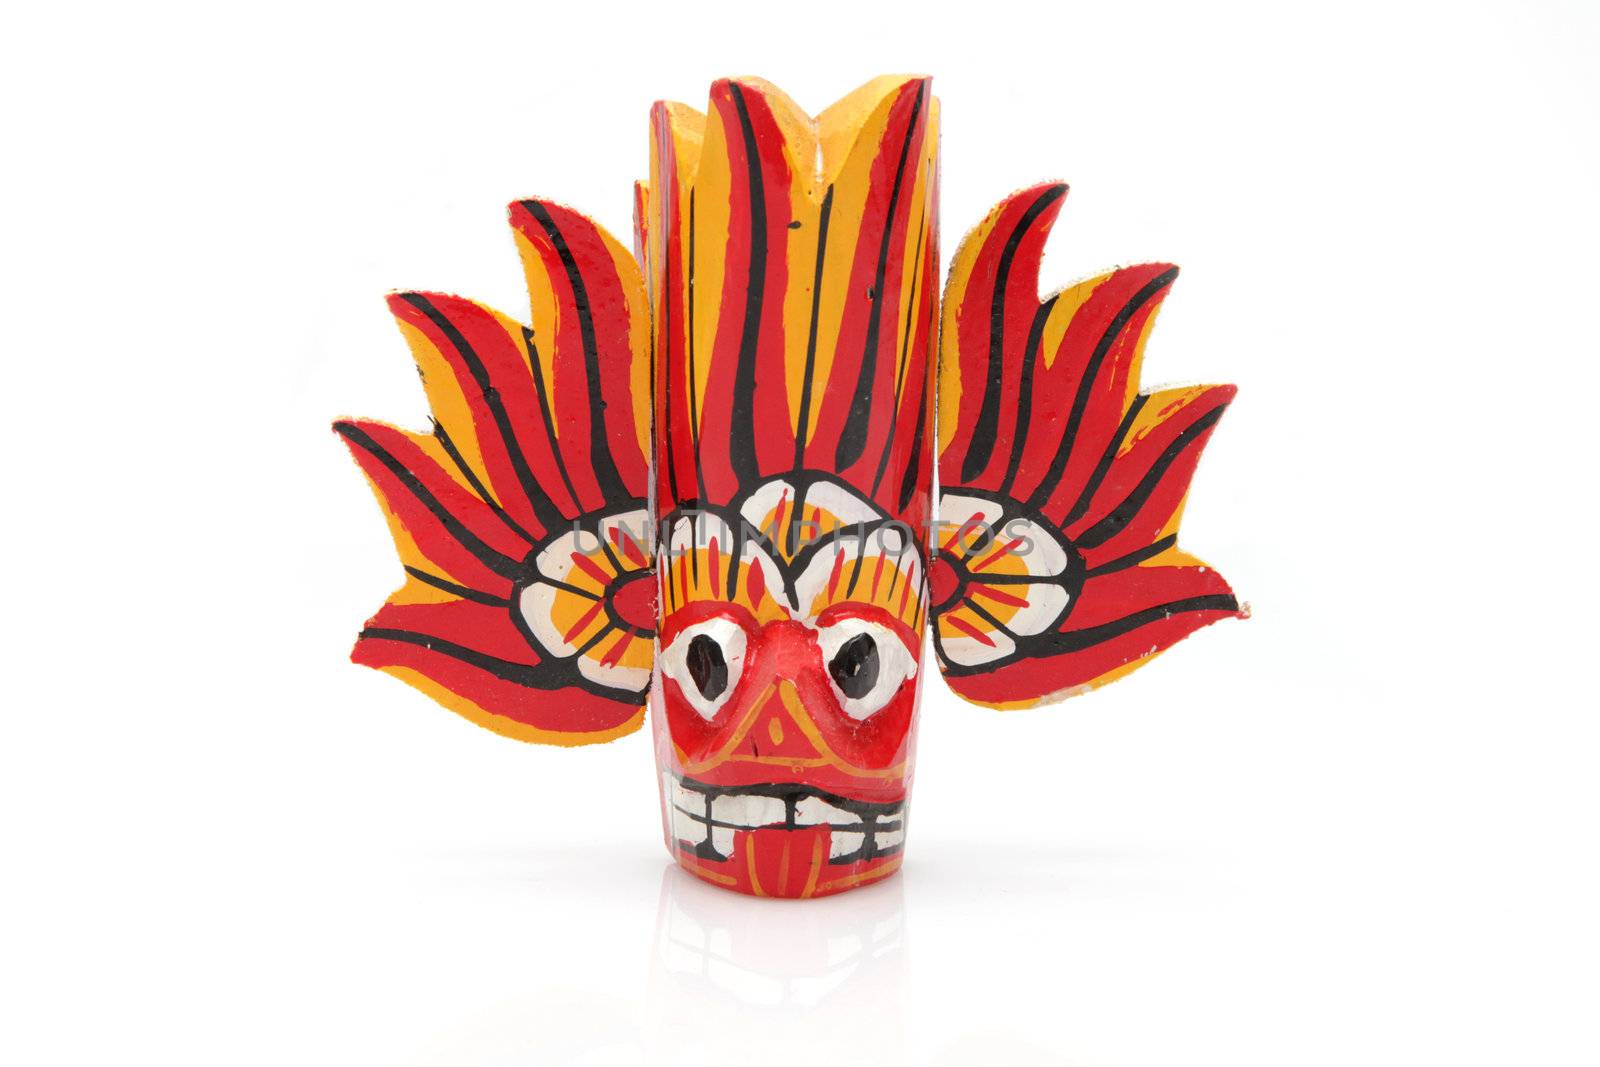 Fire Mask - Wooden Mask from Sri Lanka